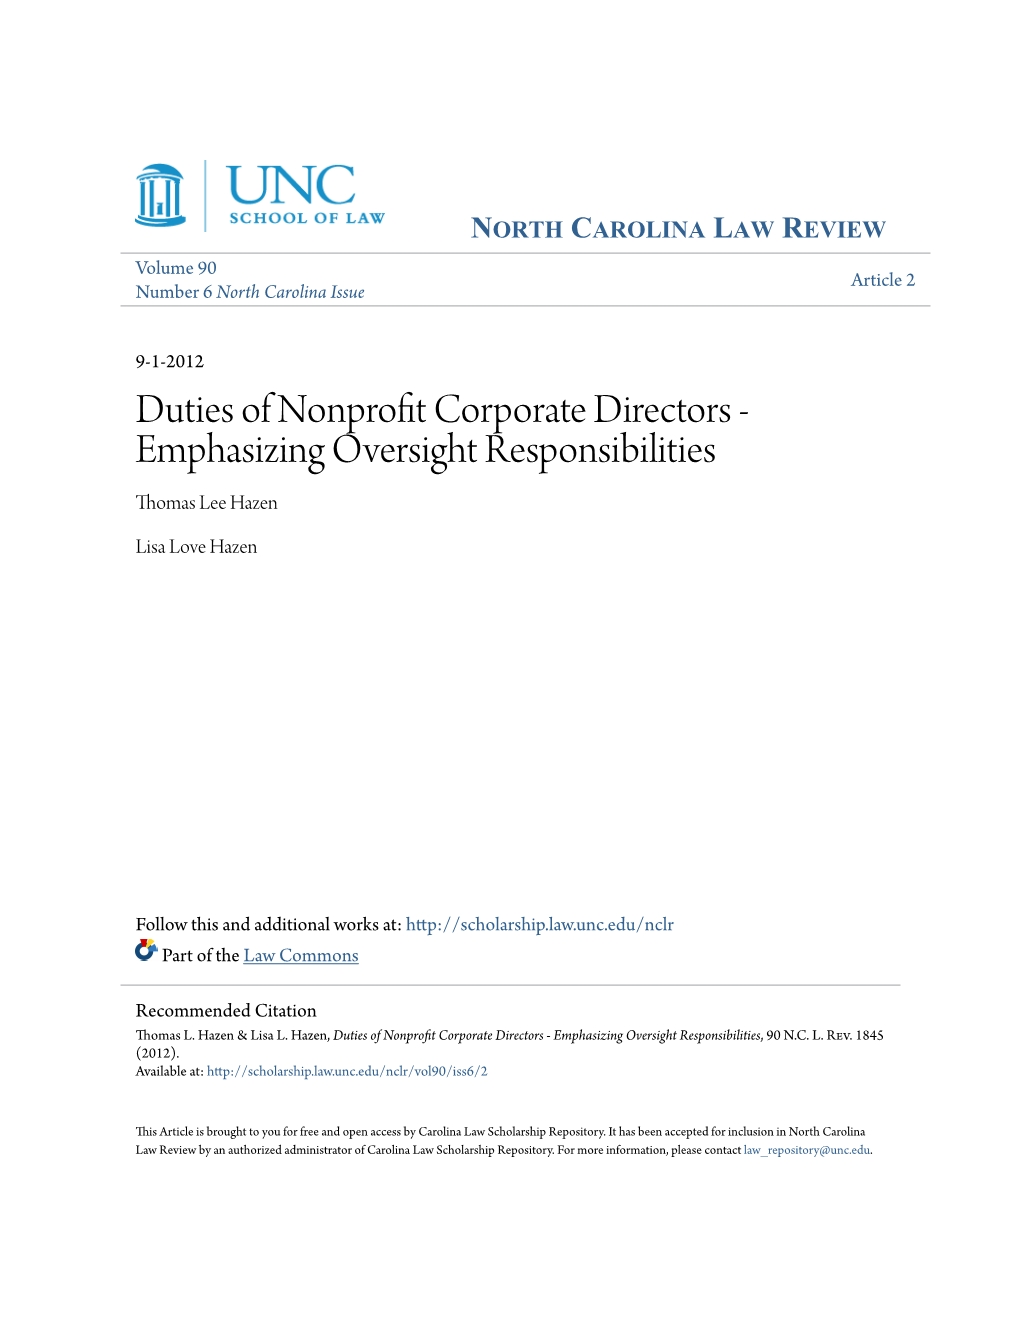 Duties of Nonprofit Corporate Directors - Emphasizing Oversight Responsibilities, 90 N.C